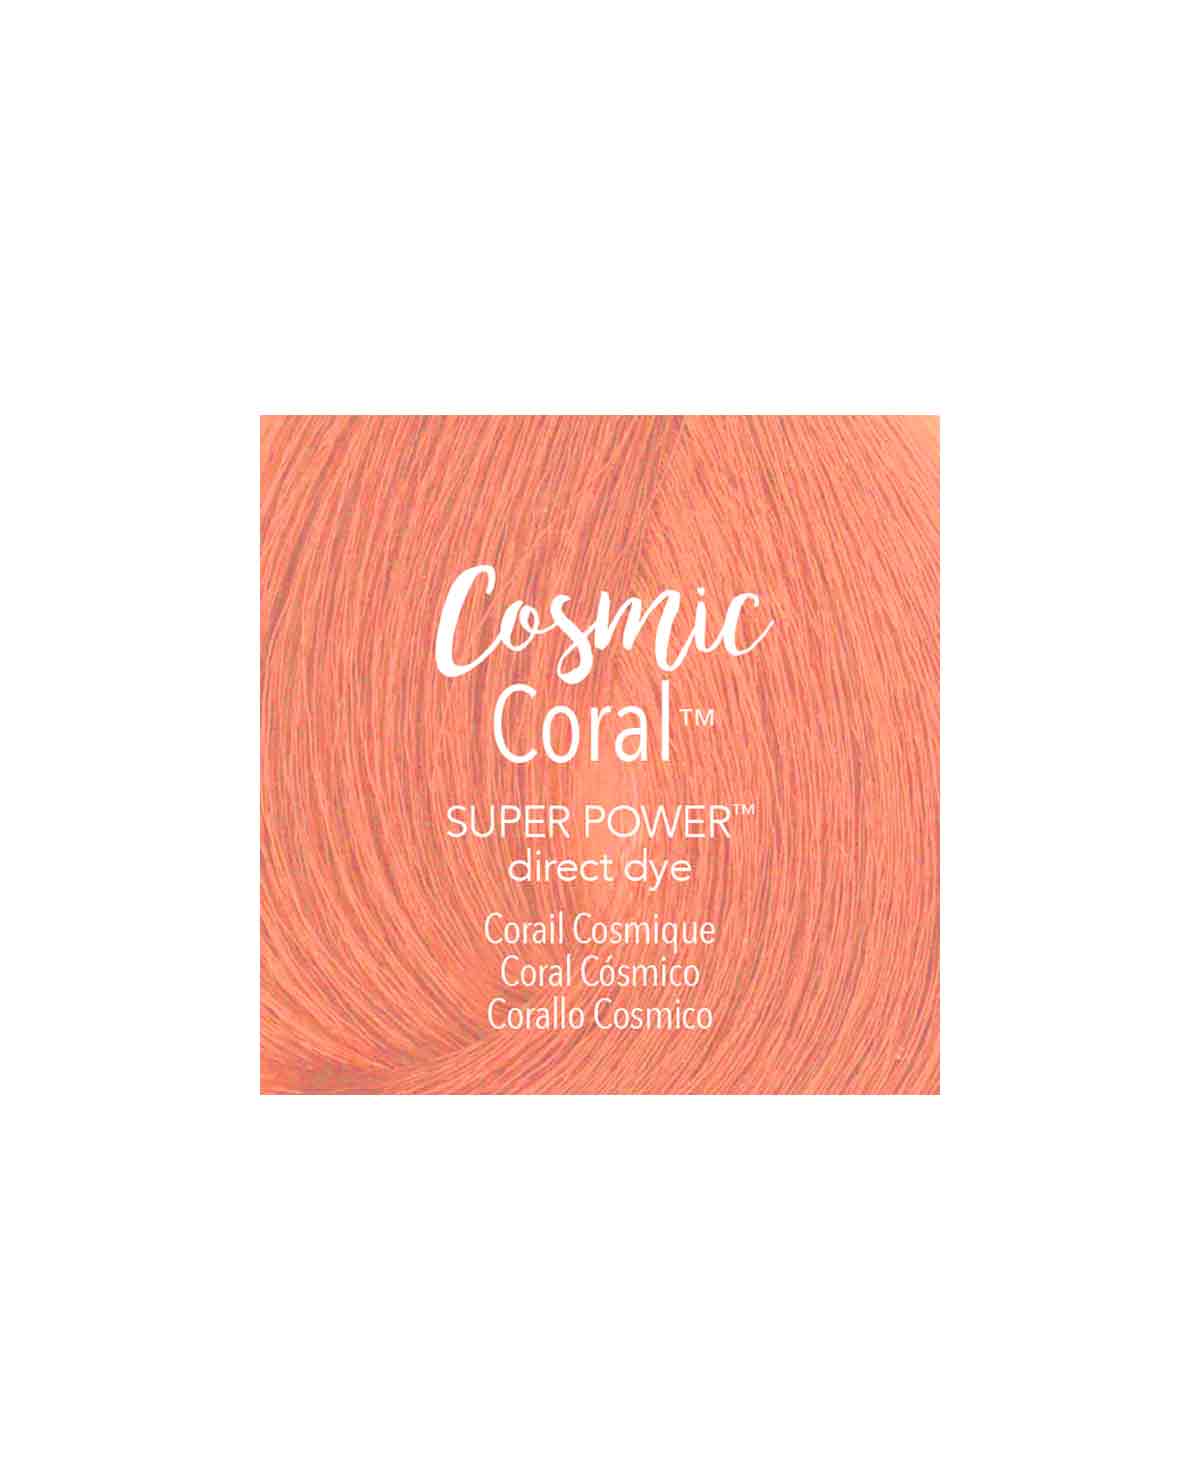 Mydentity - Cosmic Coral